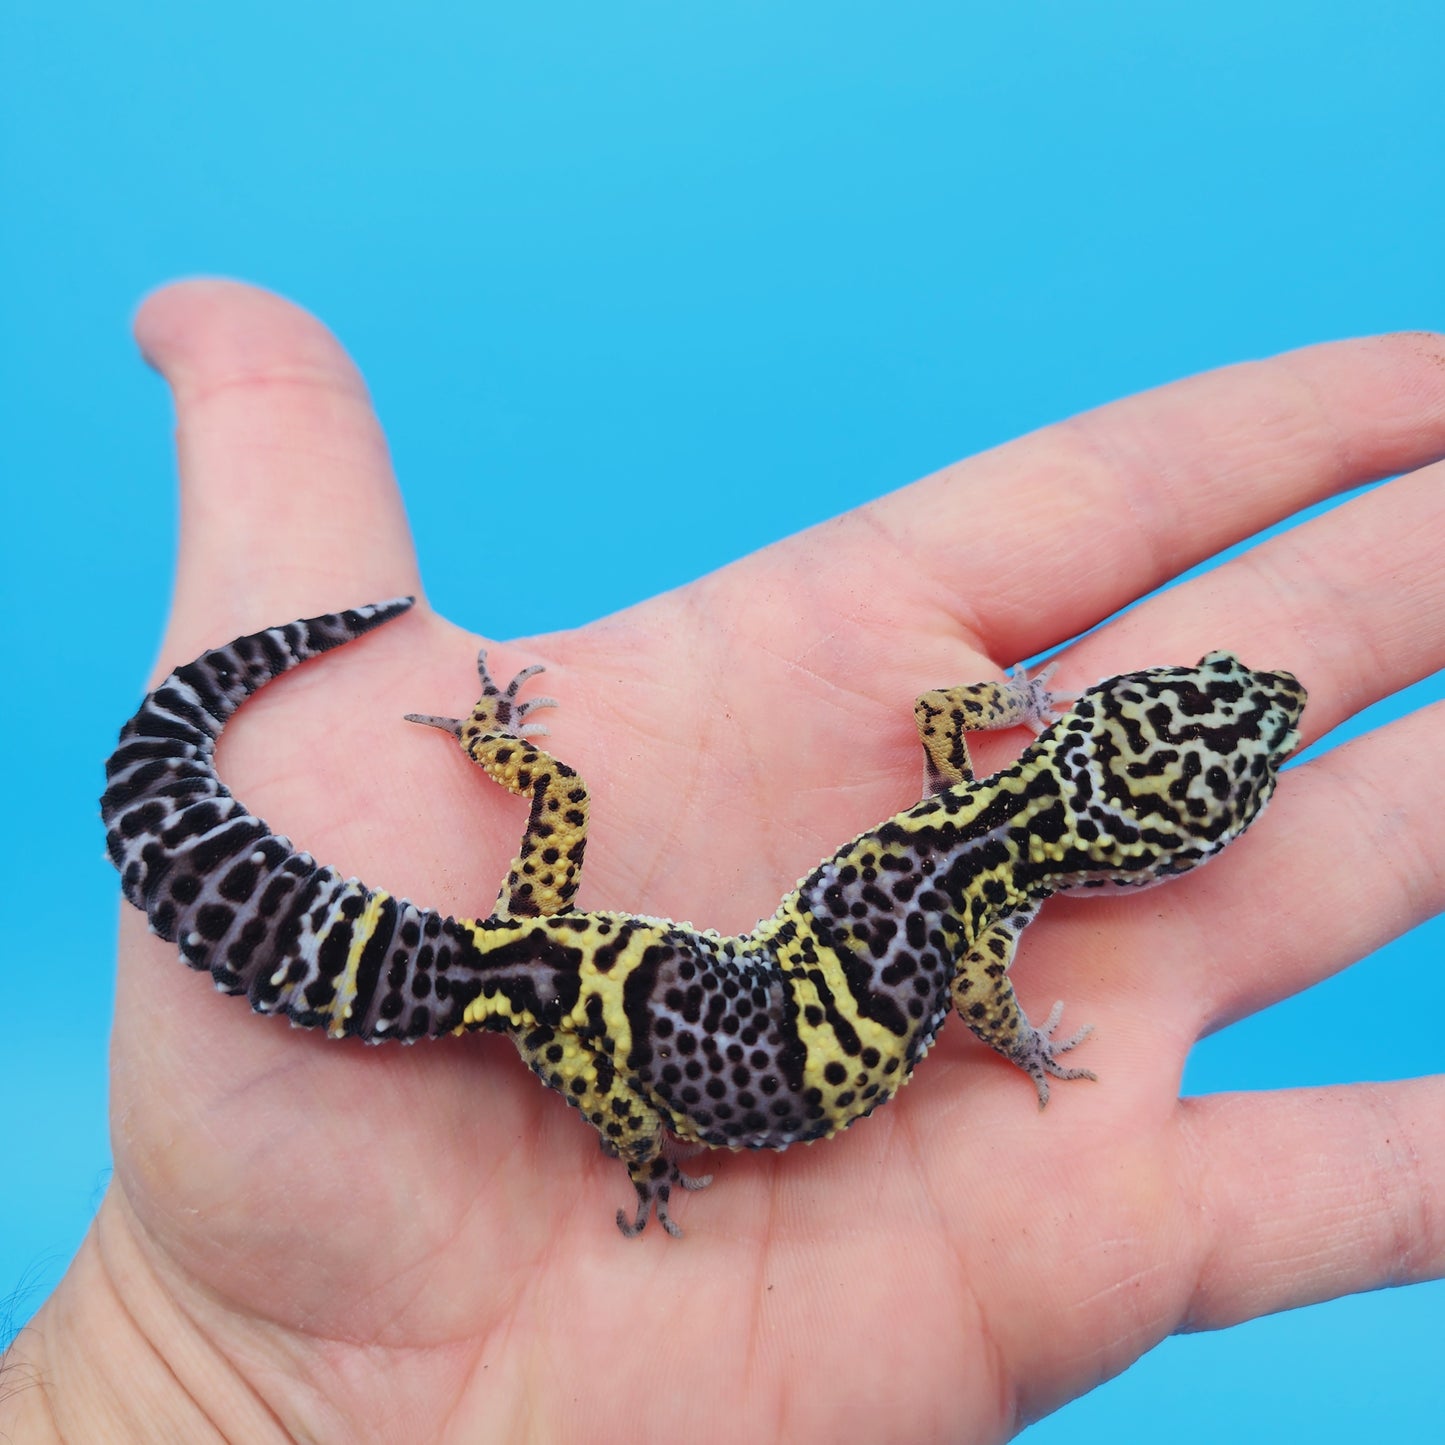 Female Black Night (50%) Afghanicus (25%) Turcmenicus (25%) Leopard Gecko